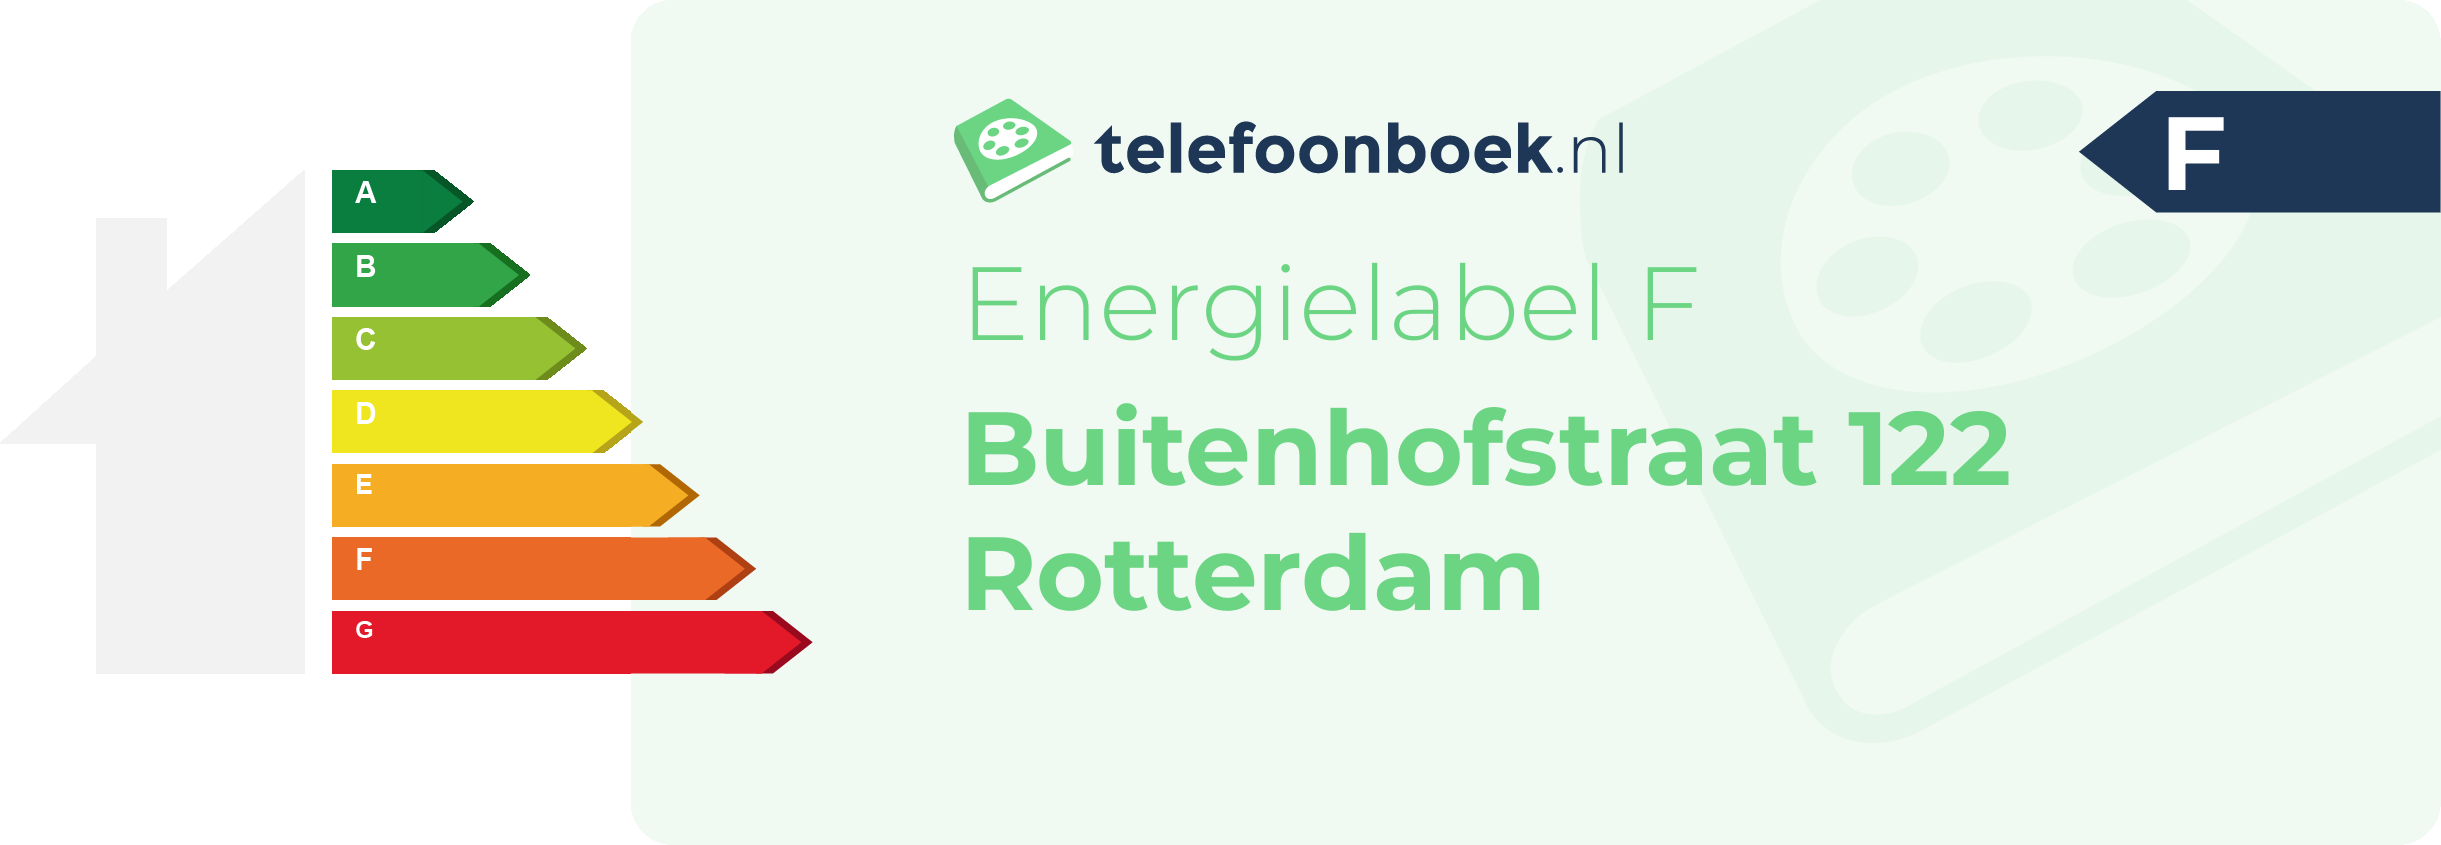 Energielabel Buitenhofstraat 122 Rotterdam